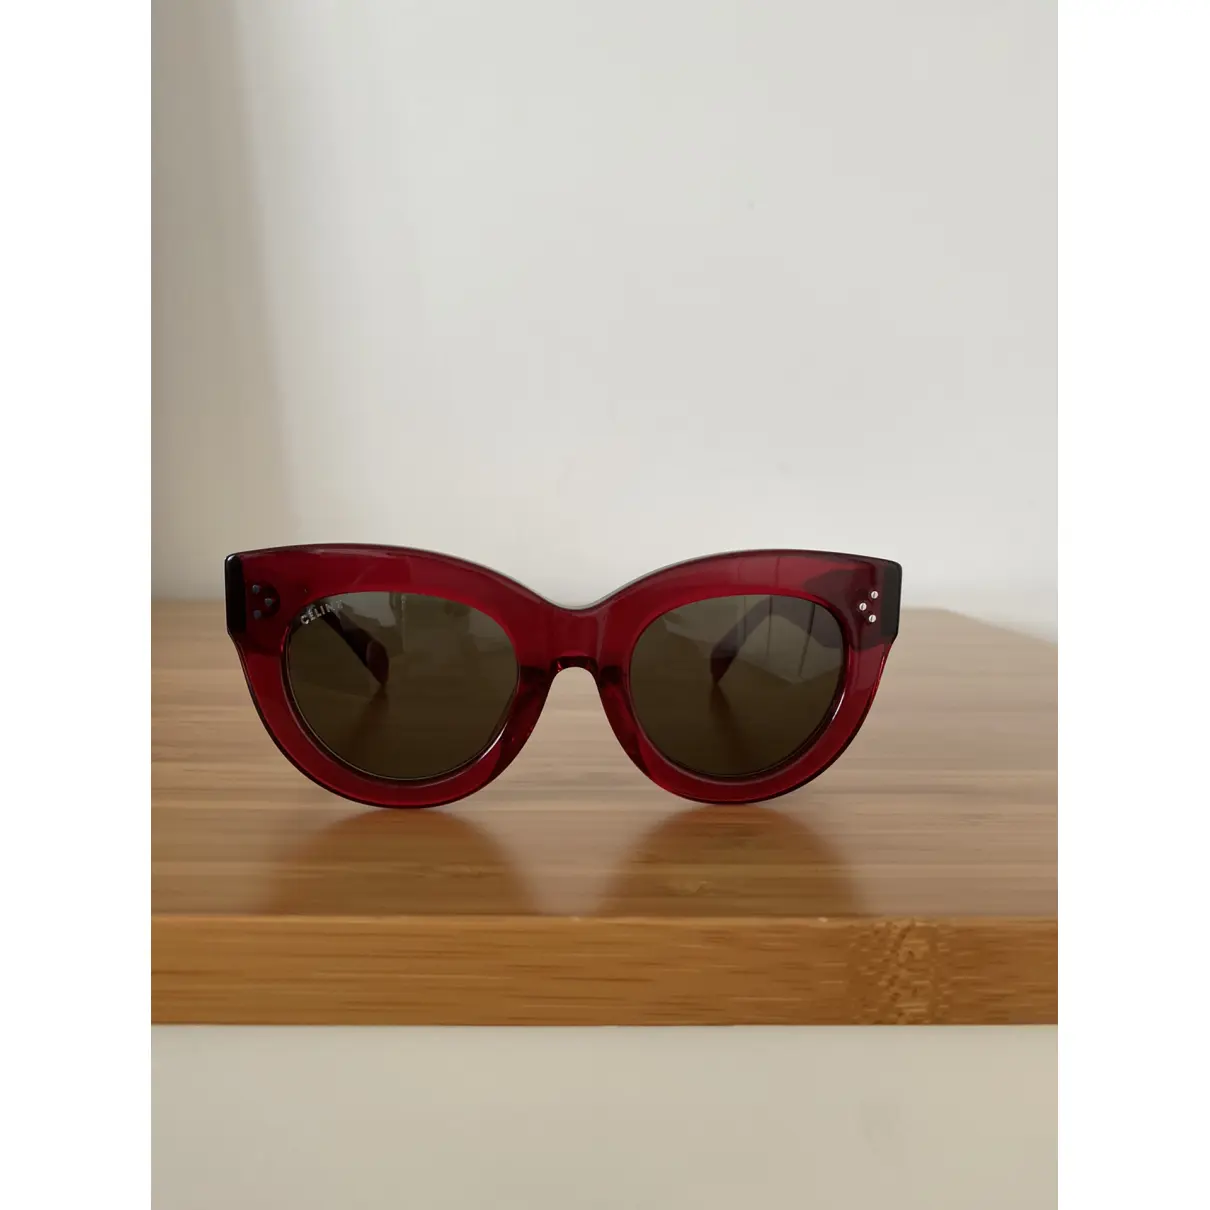 Buy Celine Caty sunglasses online